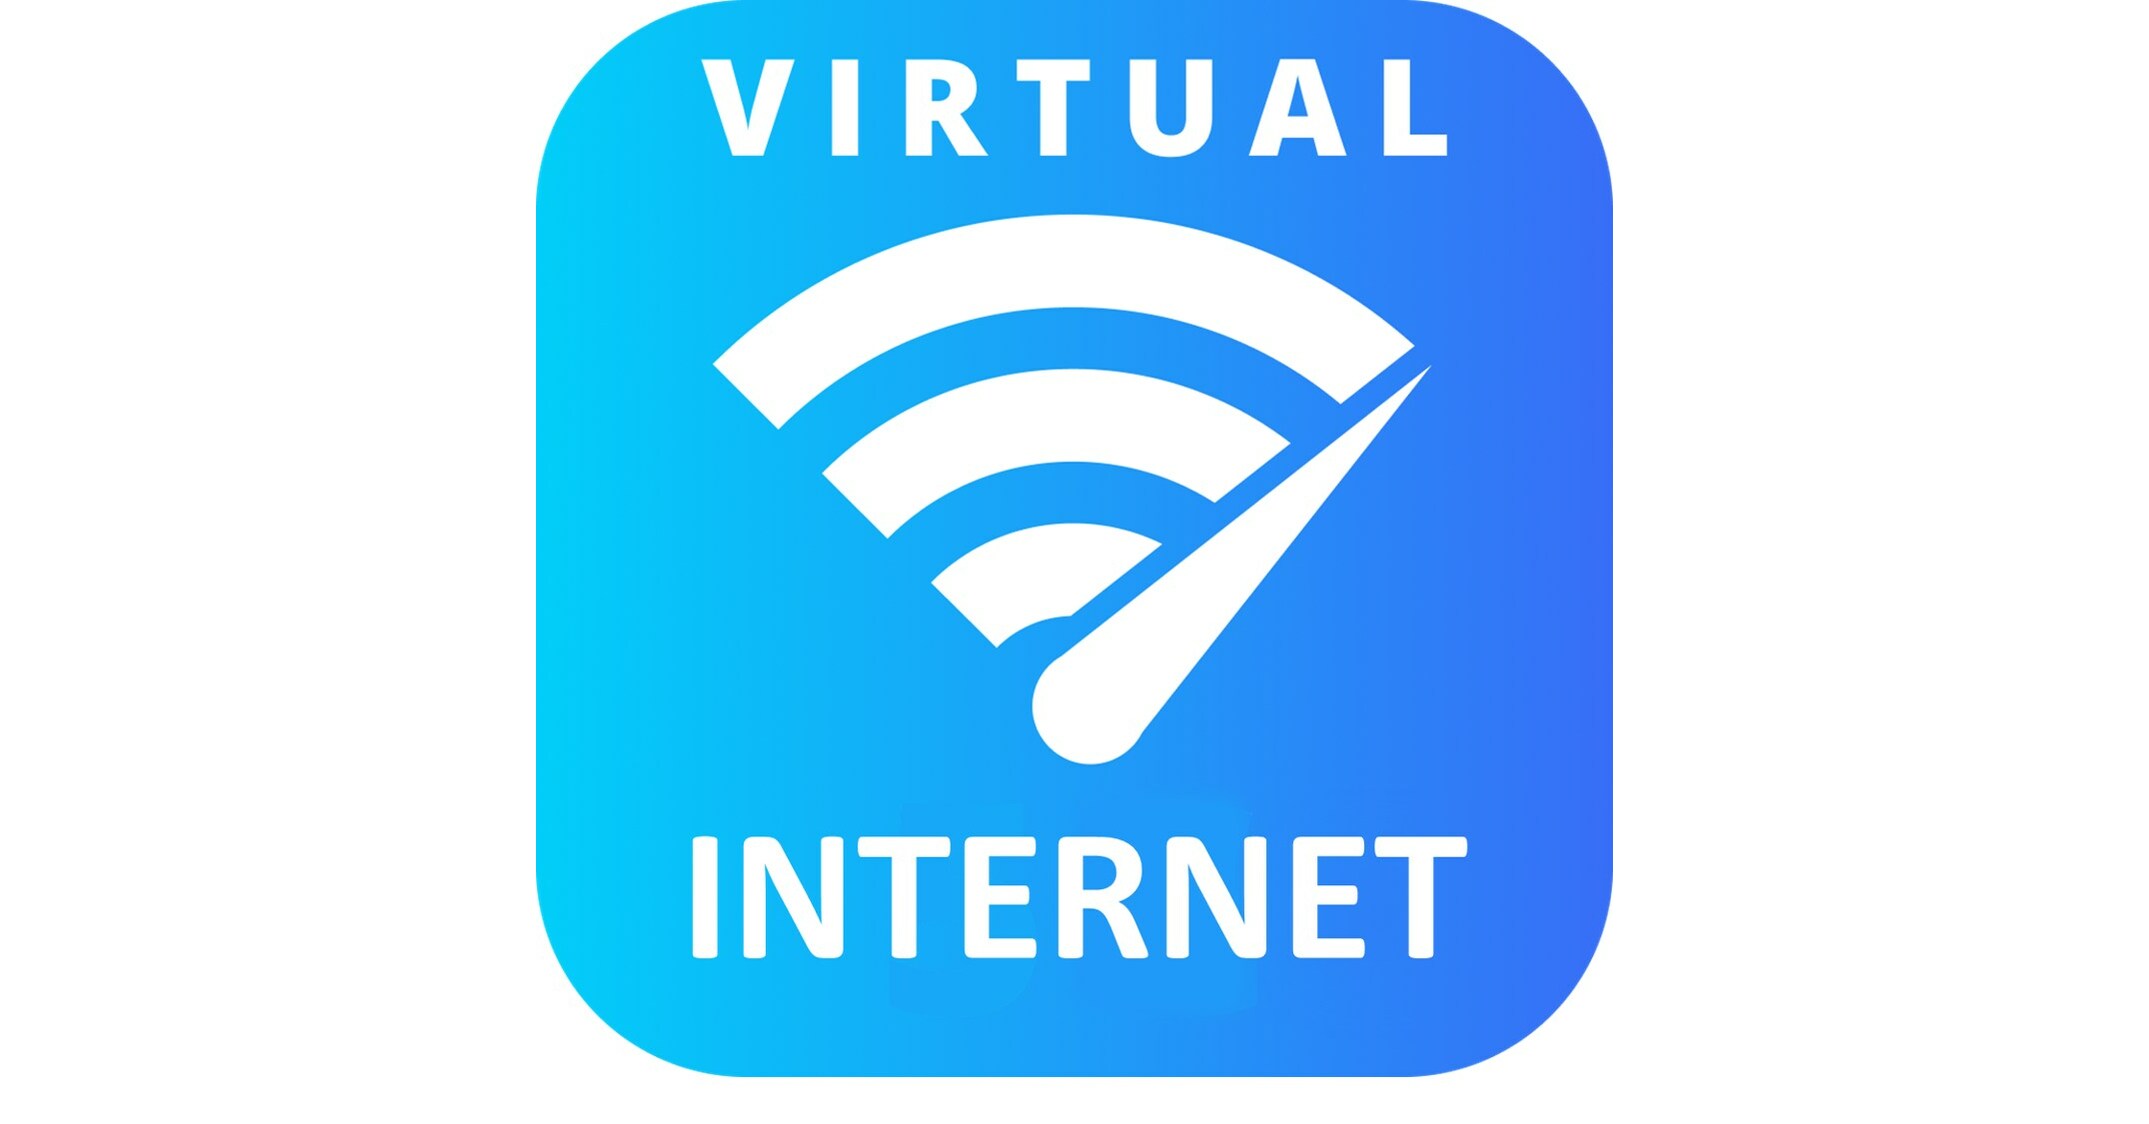 Virtual Internet Announces NetSpace Virtual Internet’s Marketplace and Portal